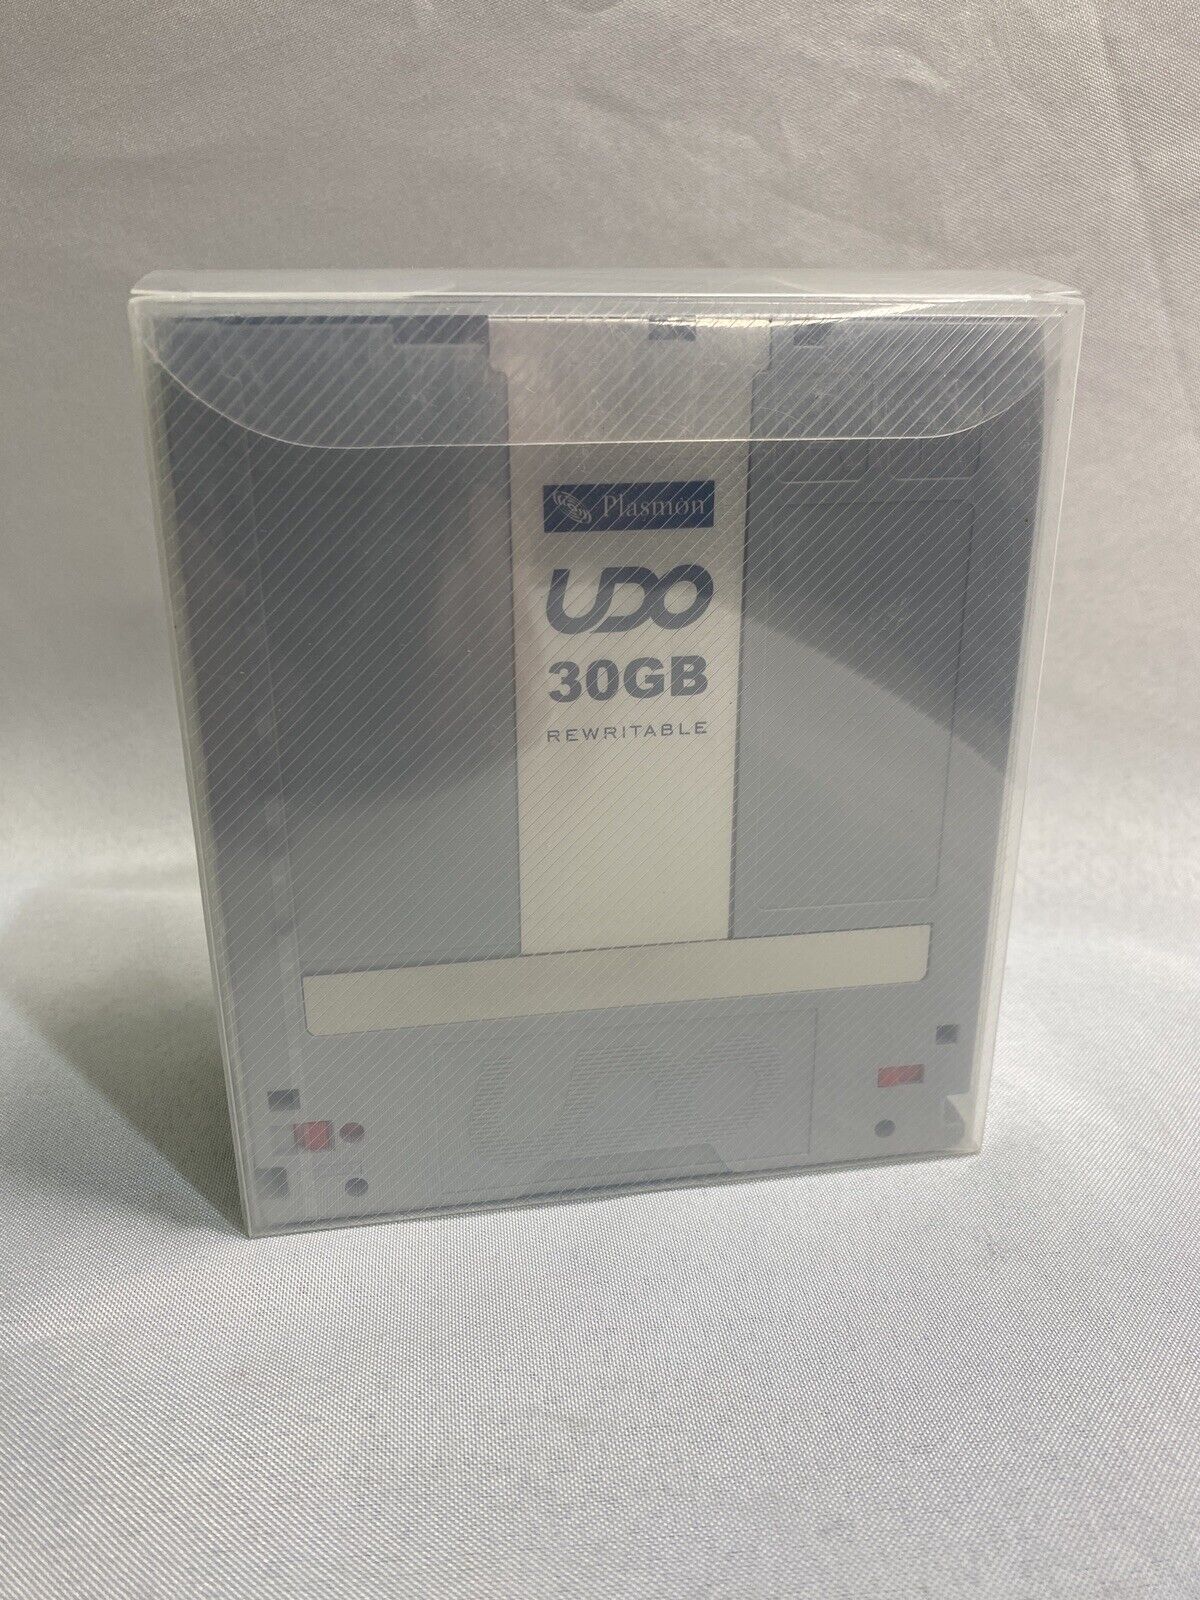 Plasmon UDO30RWX5 30GB Rewritable Optical Disk, 5-Pack UDO Media New